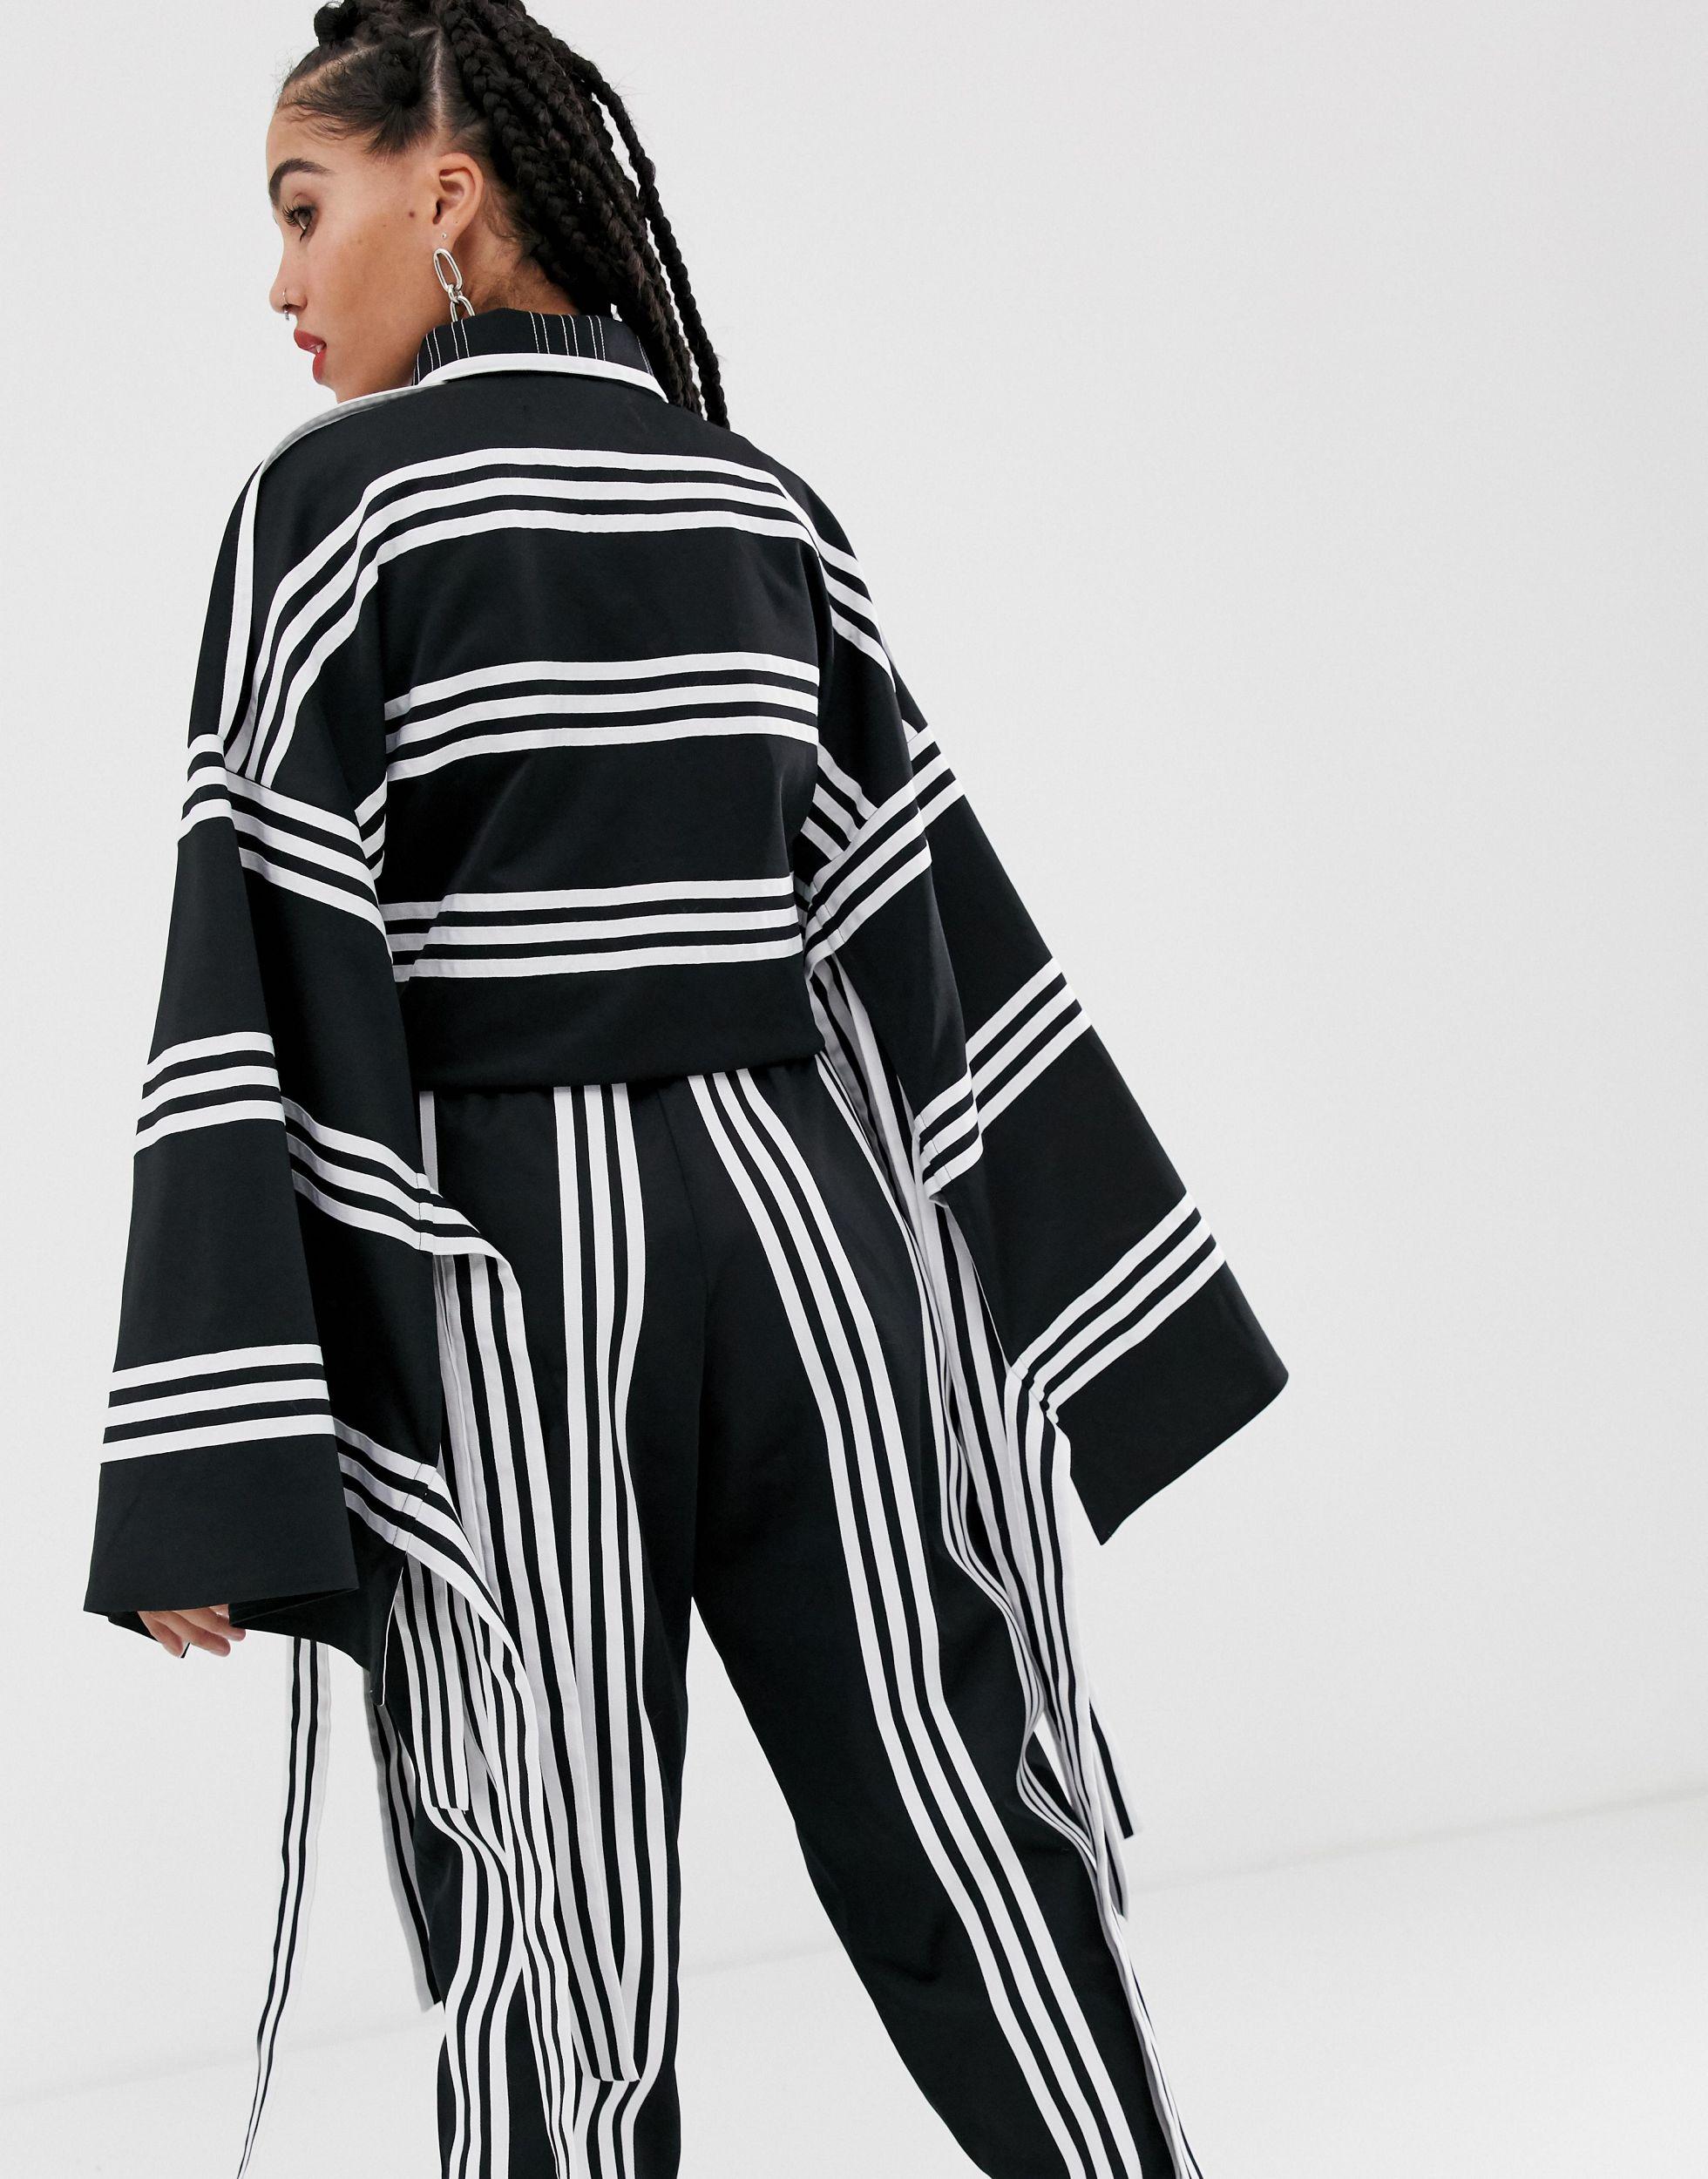 adidas Originals X Ji Won Choi Mixed Stripe Kimono In Black | Lyst